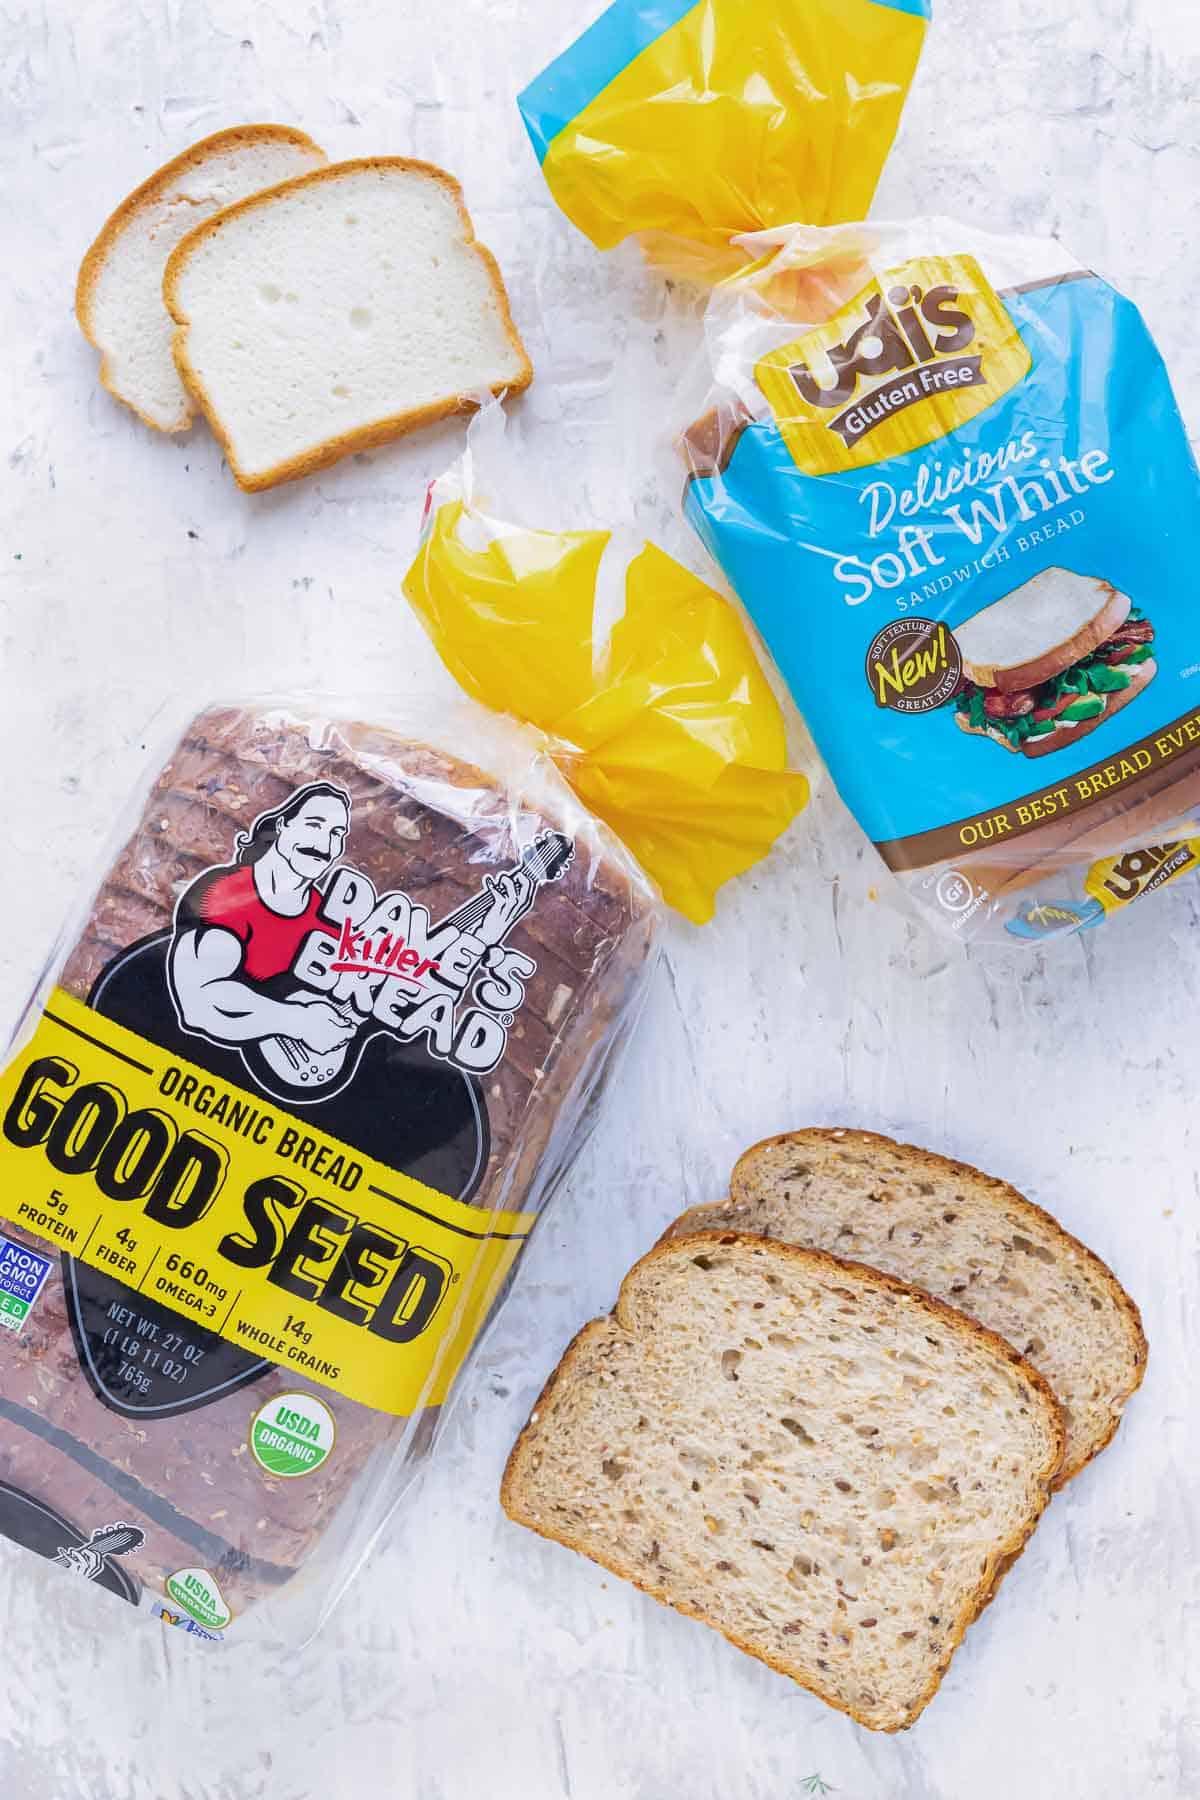 Gluten-free sandwich bread and whole wheat regular sandwich bread for a chicken salad sandwich recipe.